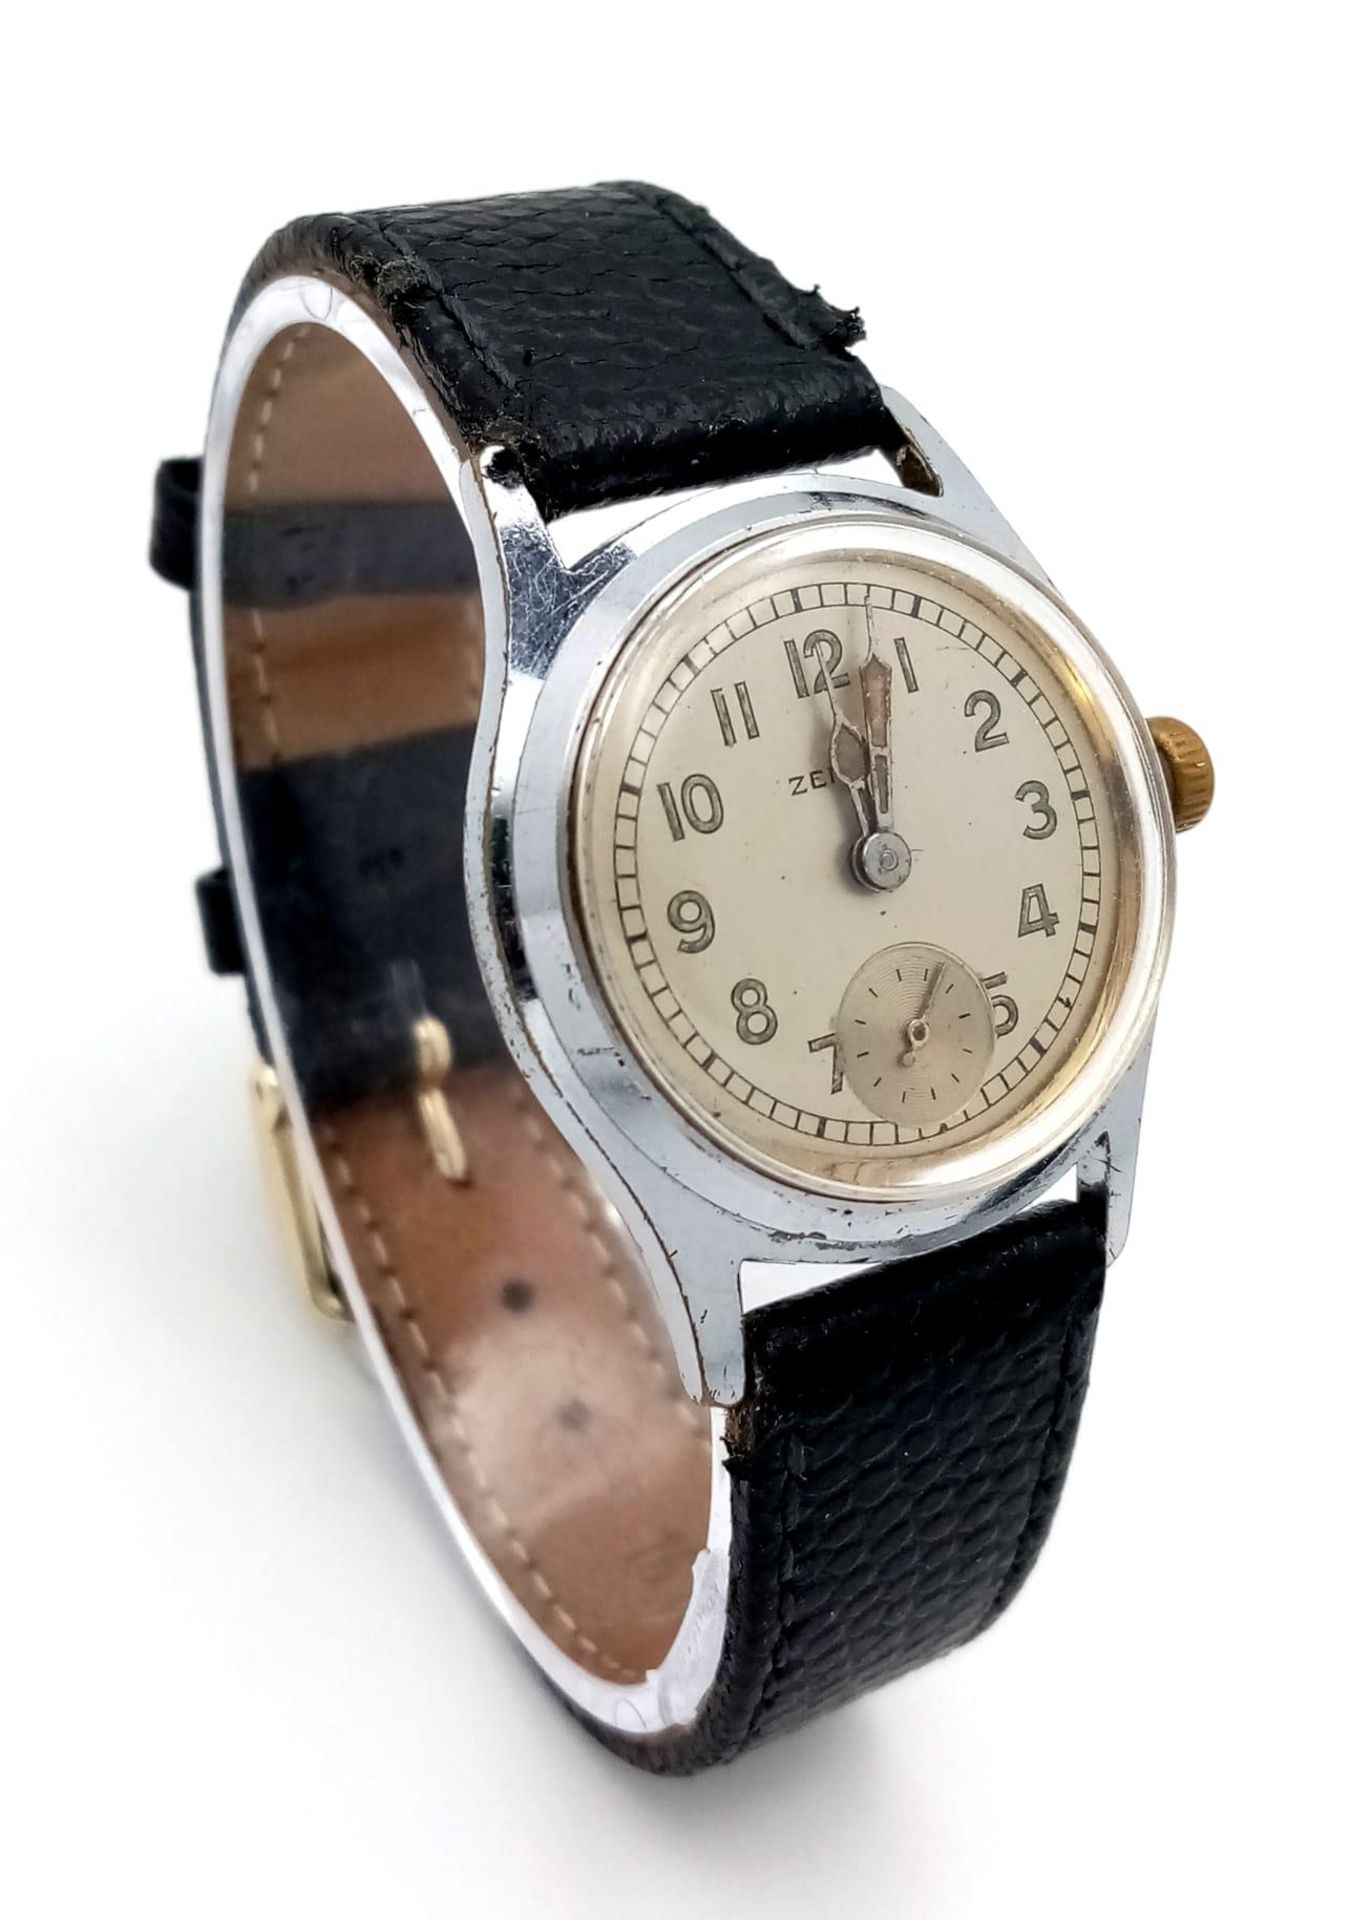 A Vintage Zenith Ladies Watch. Brown leather strap. Stainless steel case - 28mm. Silver tone dial - Bild 2 aus 8